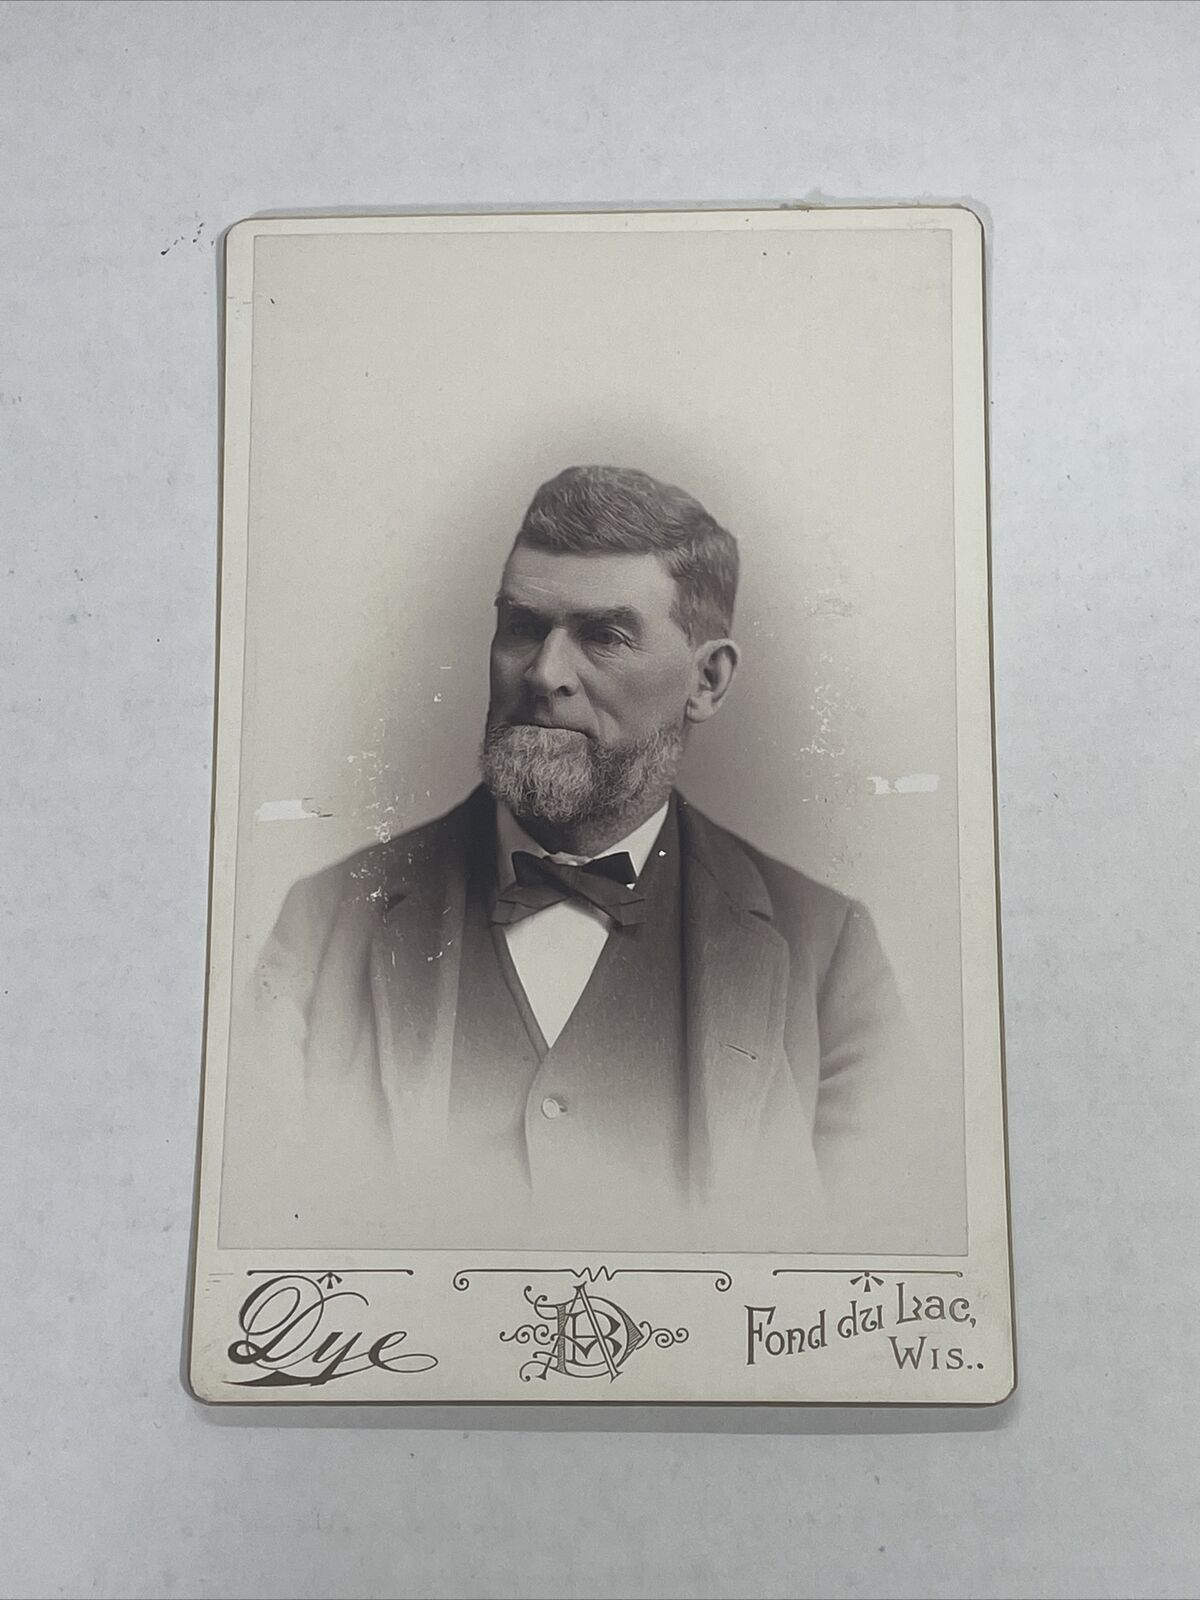 Antique Cabinet Card Photo c1870 Man in Suit - Dye - Fond du Lac, Wisconsin